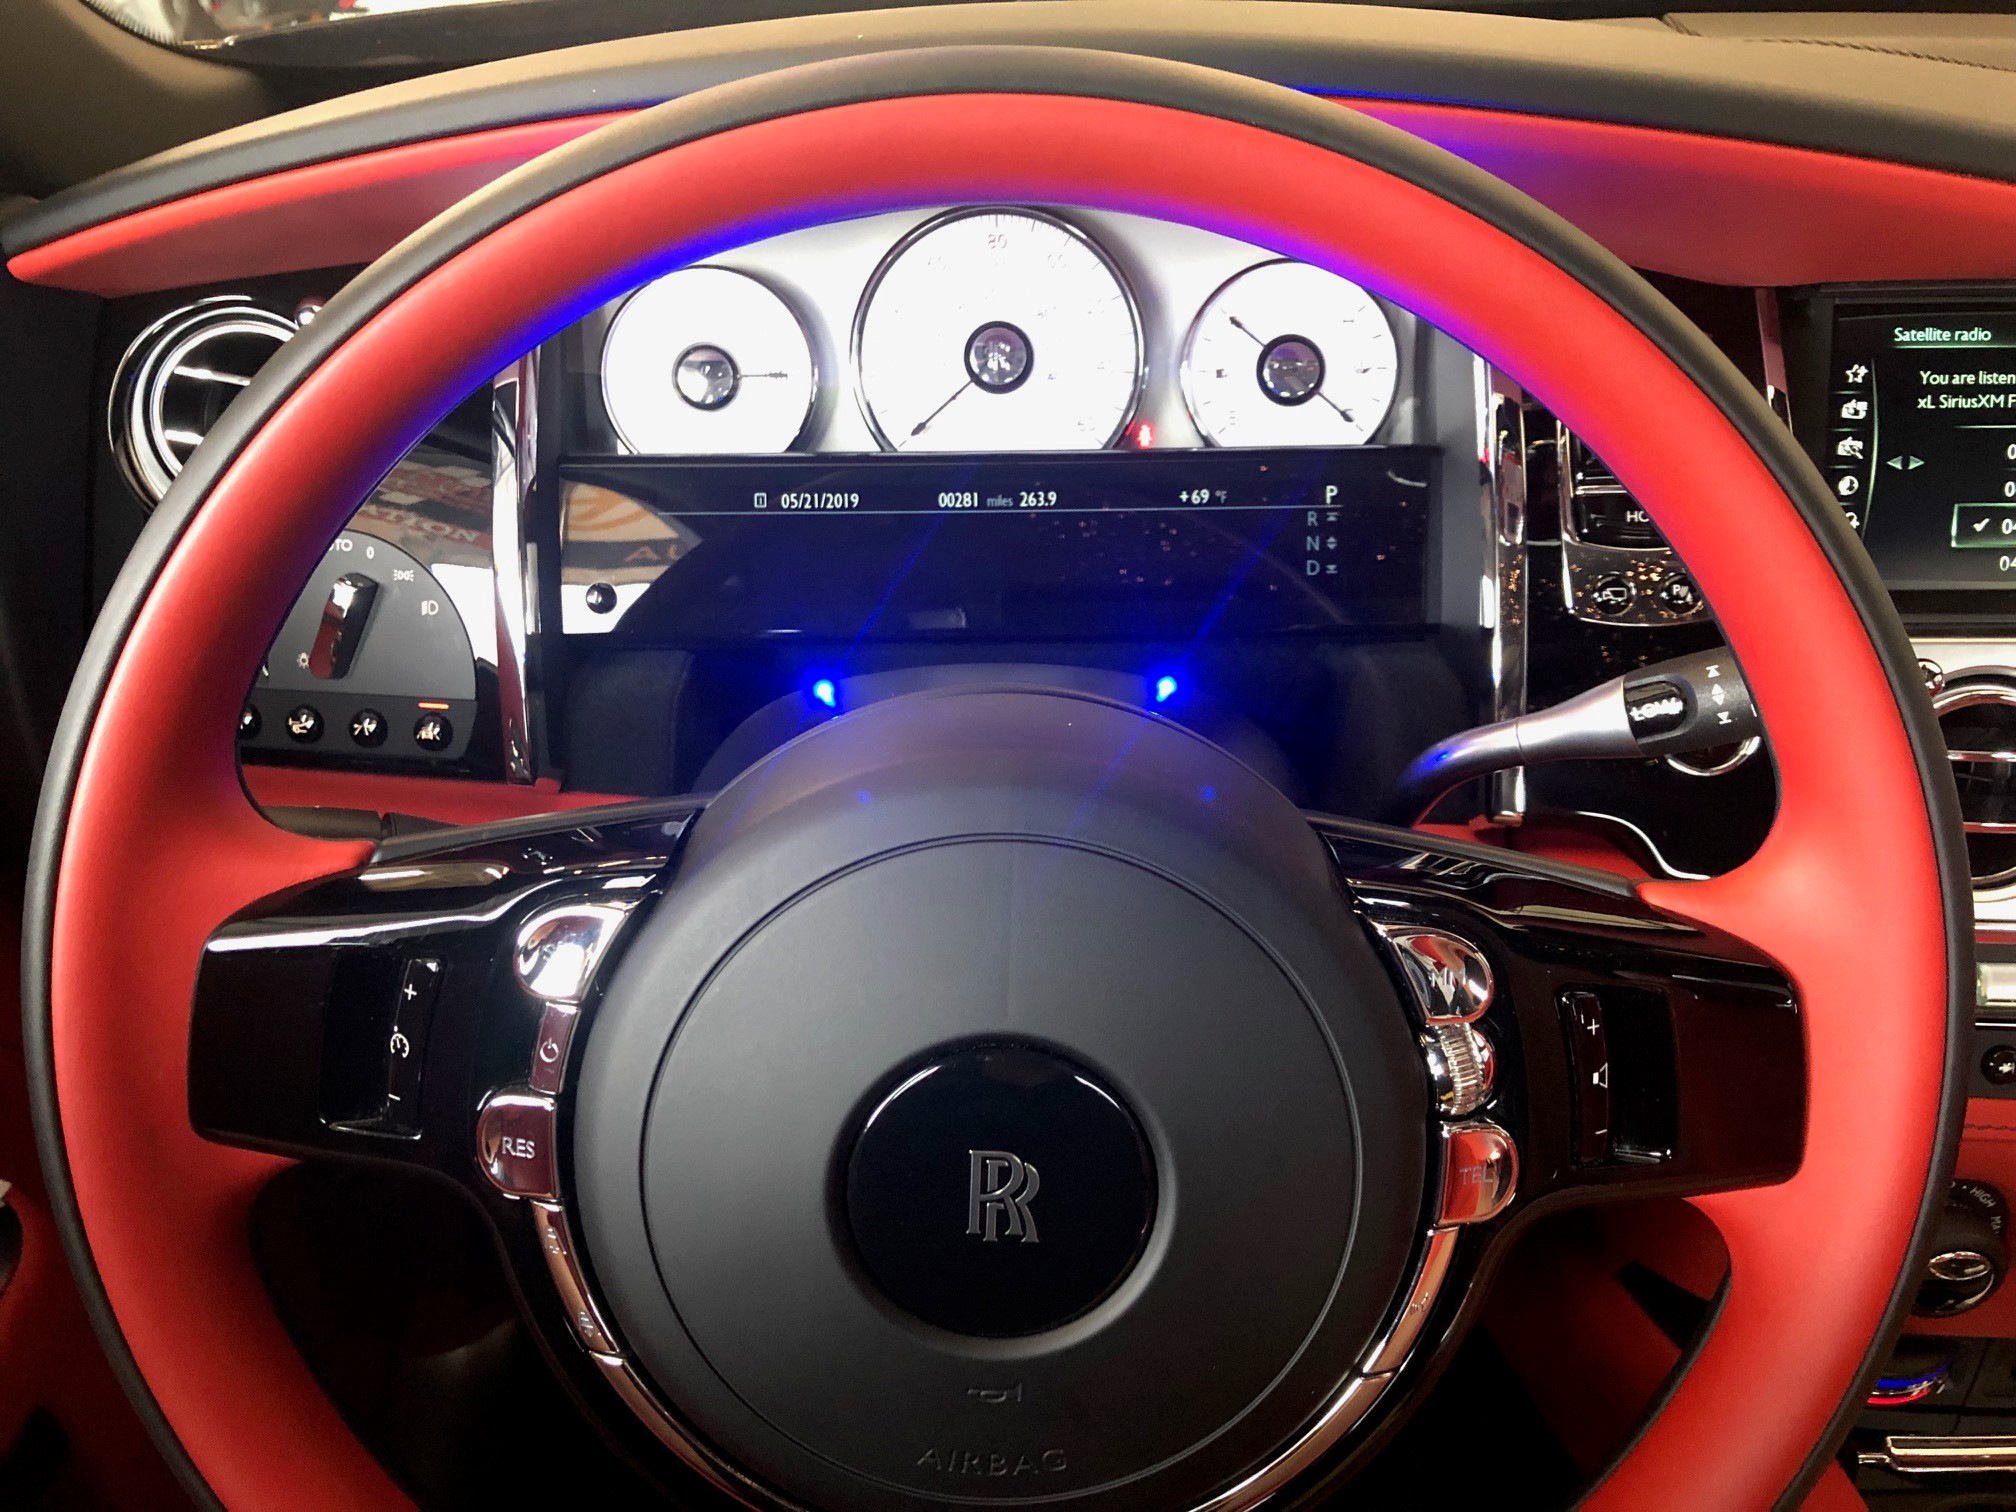 Custom K40 Police Radar Detector Alert LED's Installed on New 2019 Rolls Royce Ghost in in Santa Margarita, CA